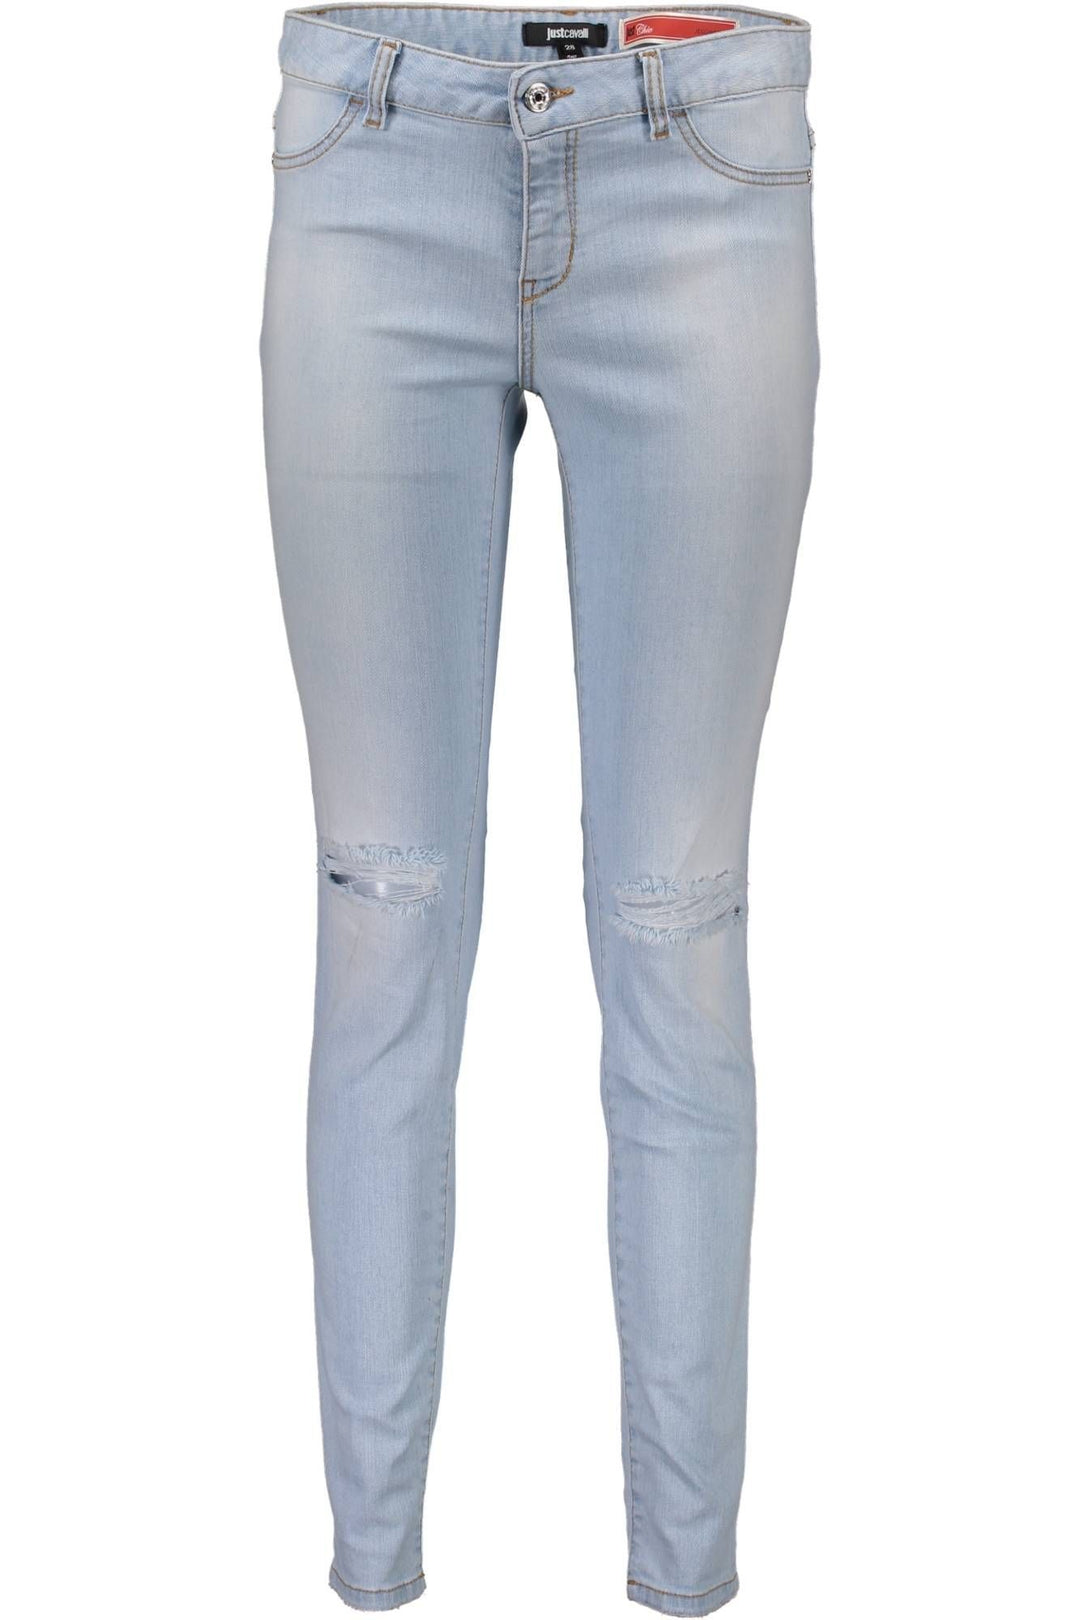 Just Cavalli Elegant Faded Light Blue Denim Jeans